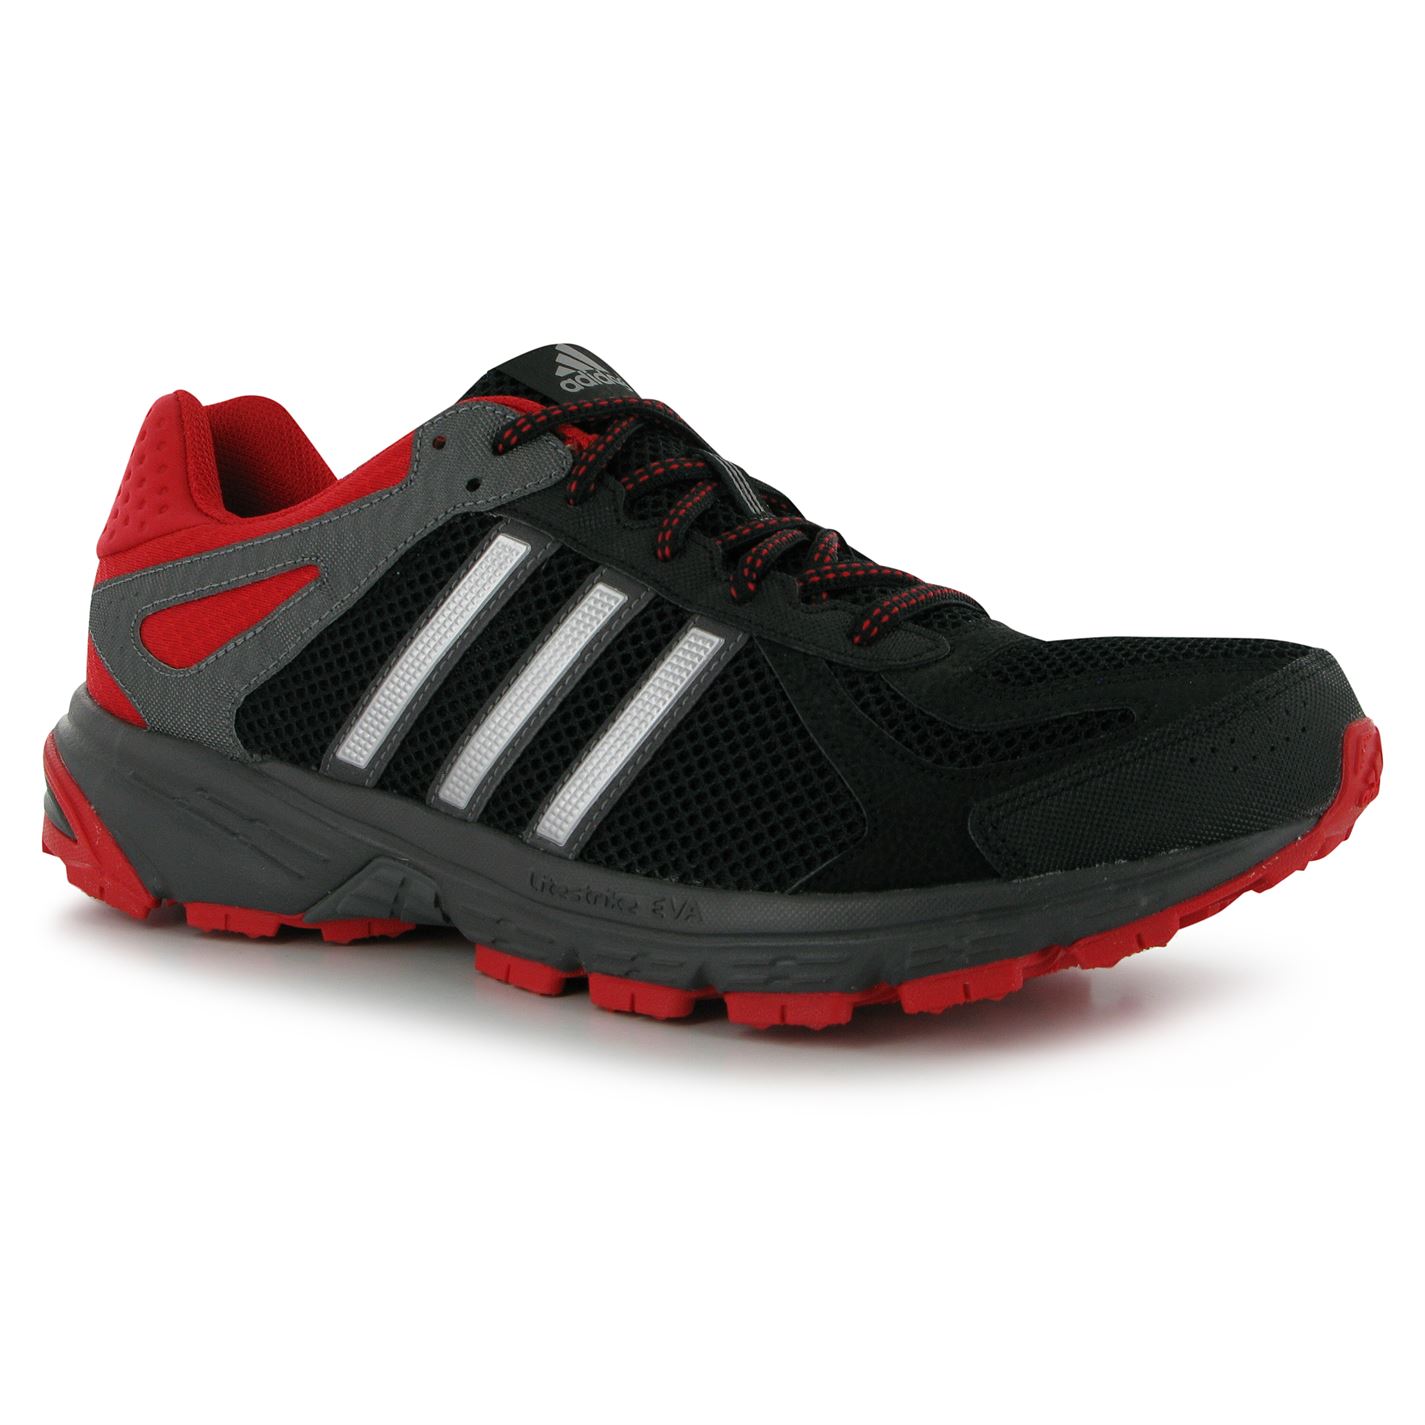 Adidasi alergare adidas Duramo 5 pentru Barbati negru rosu